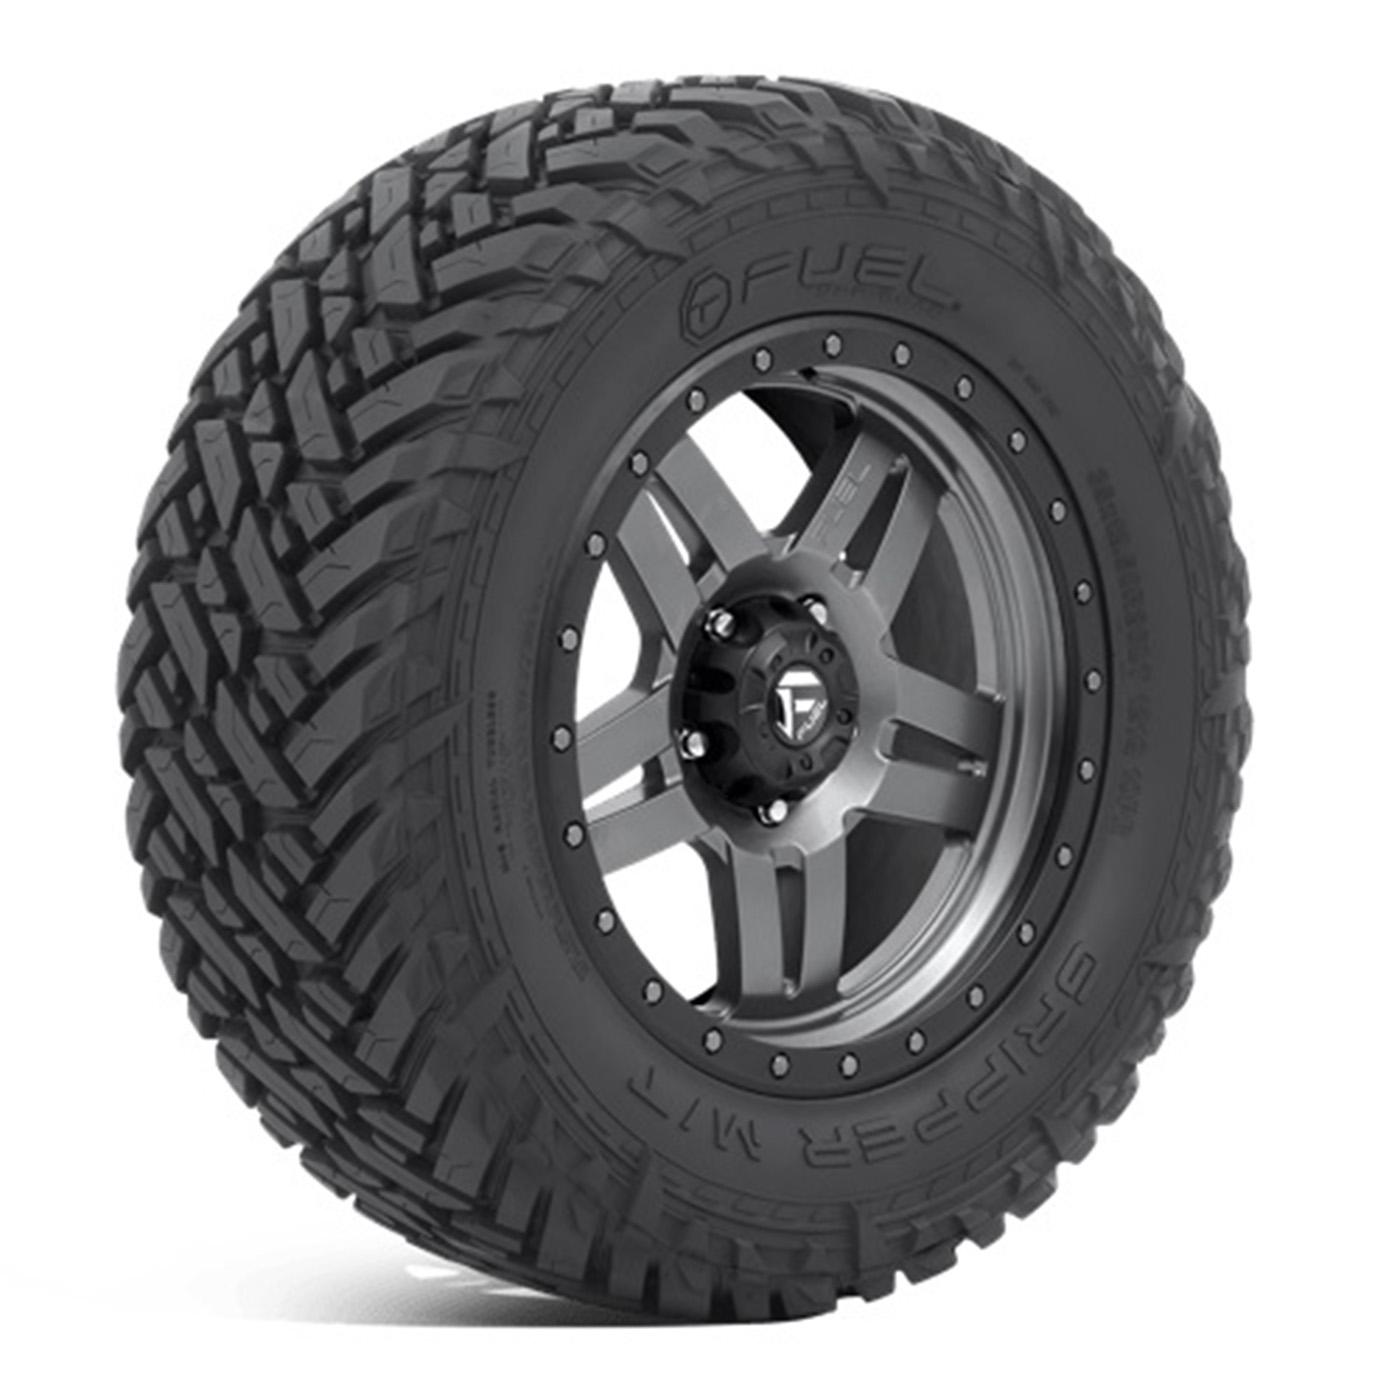 Fuel Tires - GRIPPER M/T  270/35/17  ST